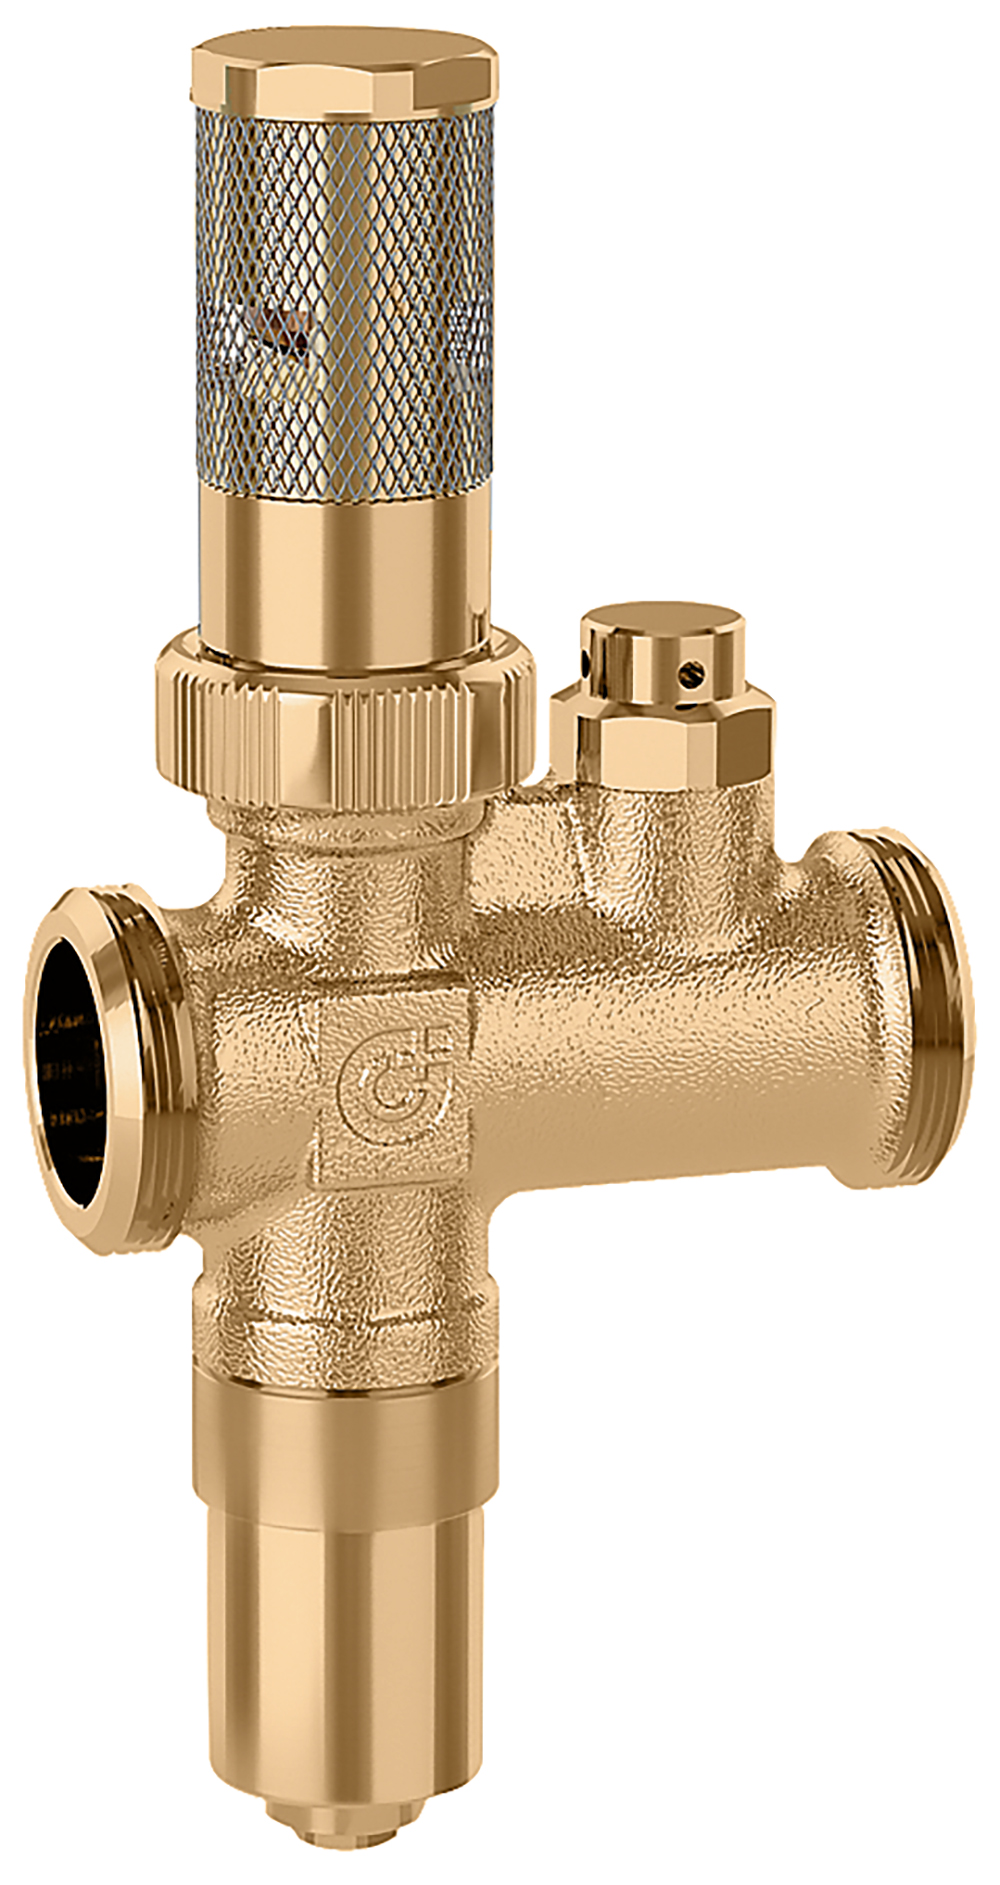 iStop Antifreeze valve with air sensor (108 series) - Air water heat pump system, Caleffi S.p.A.